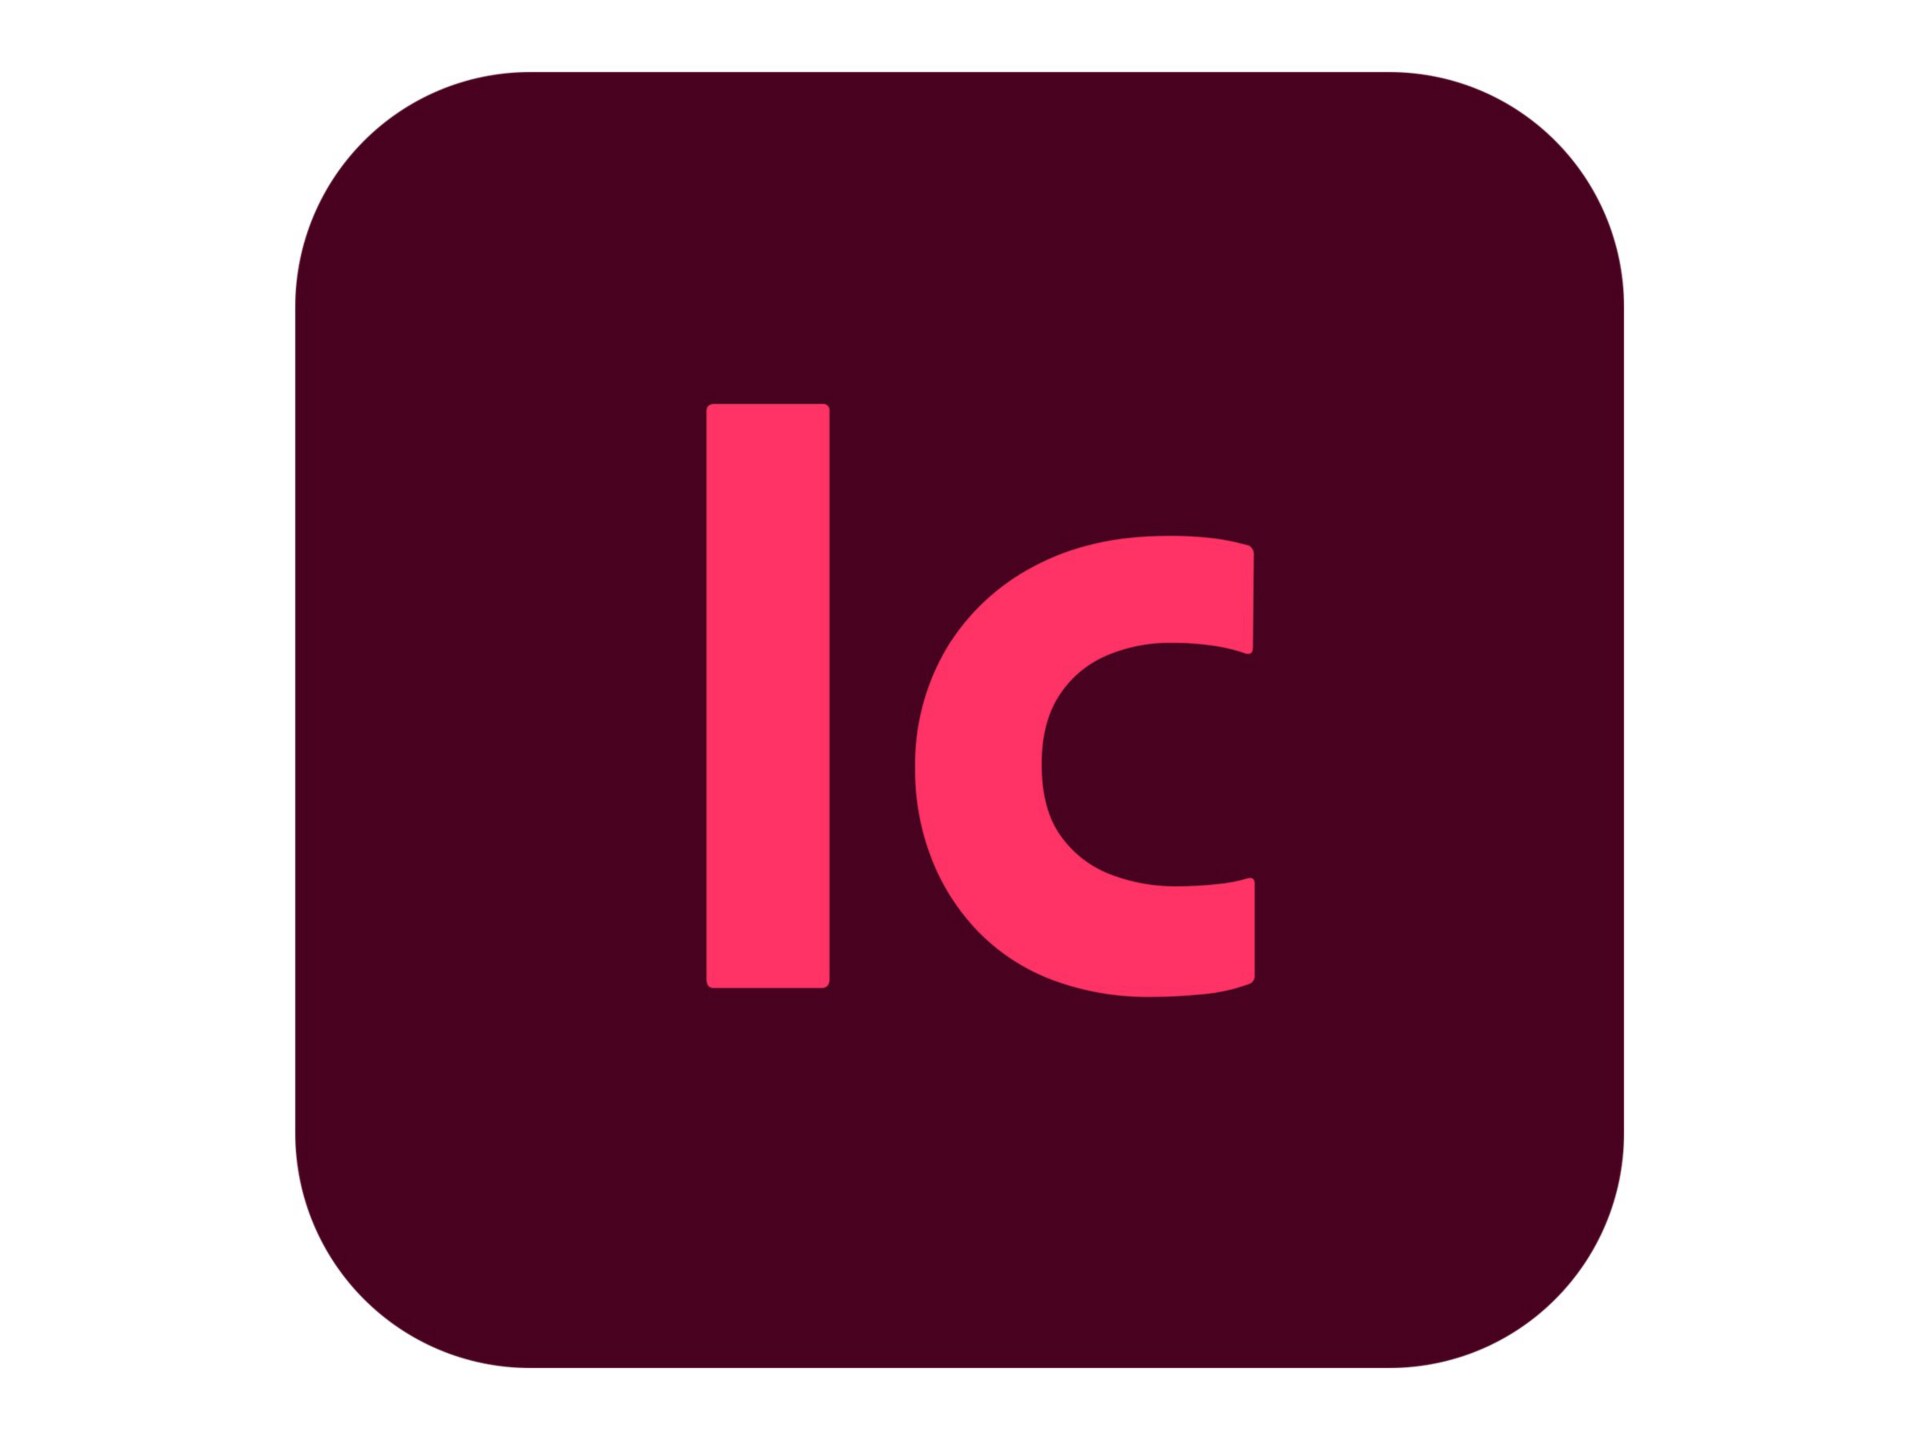 Adobe InCopy CC for Enterprise - Subscription New (1 month) - 1 named user